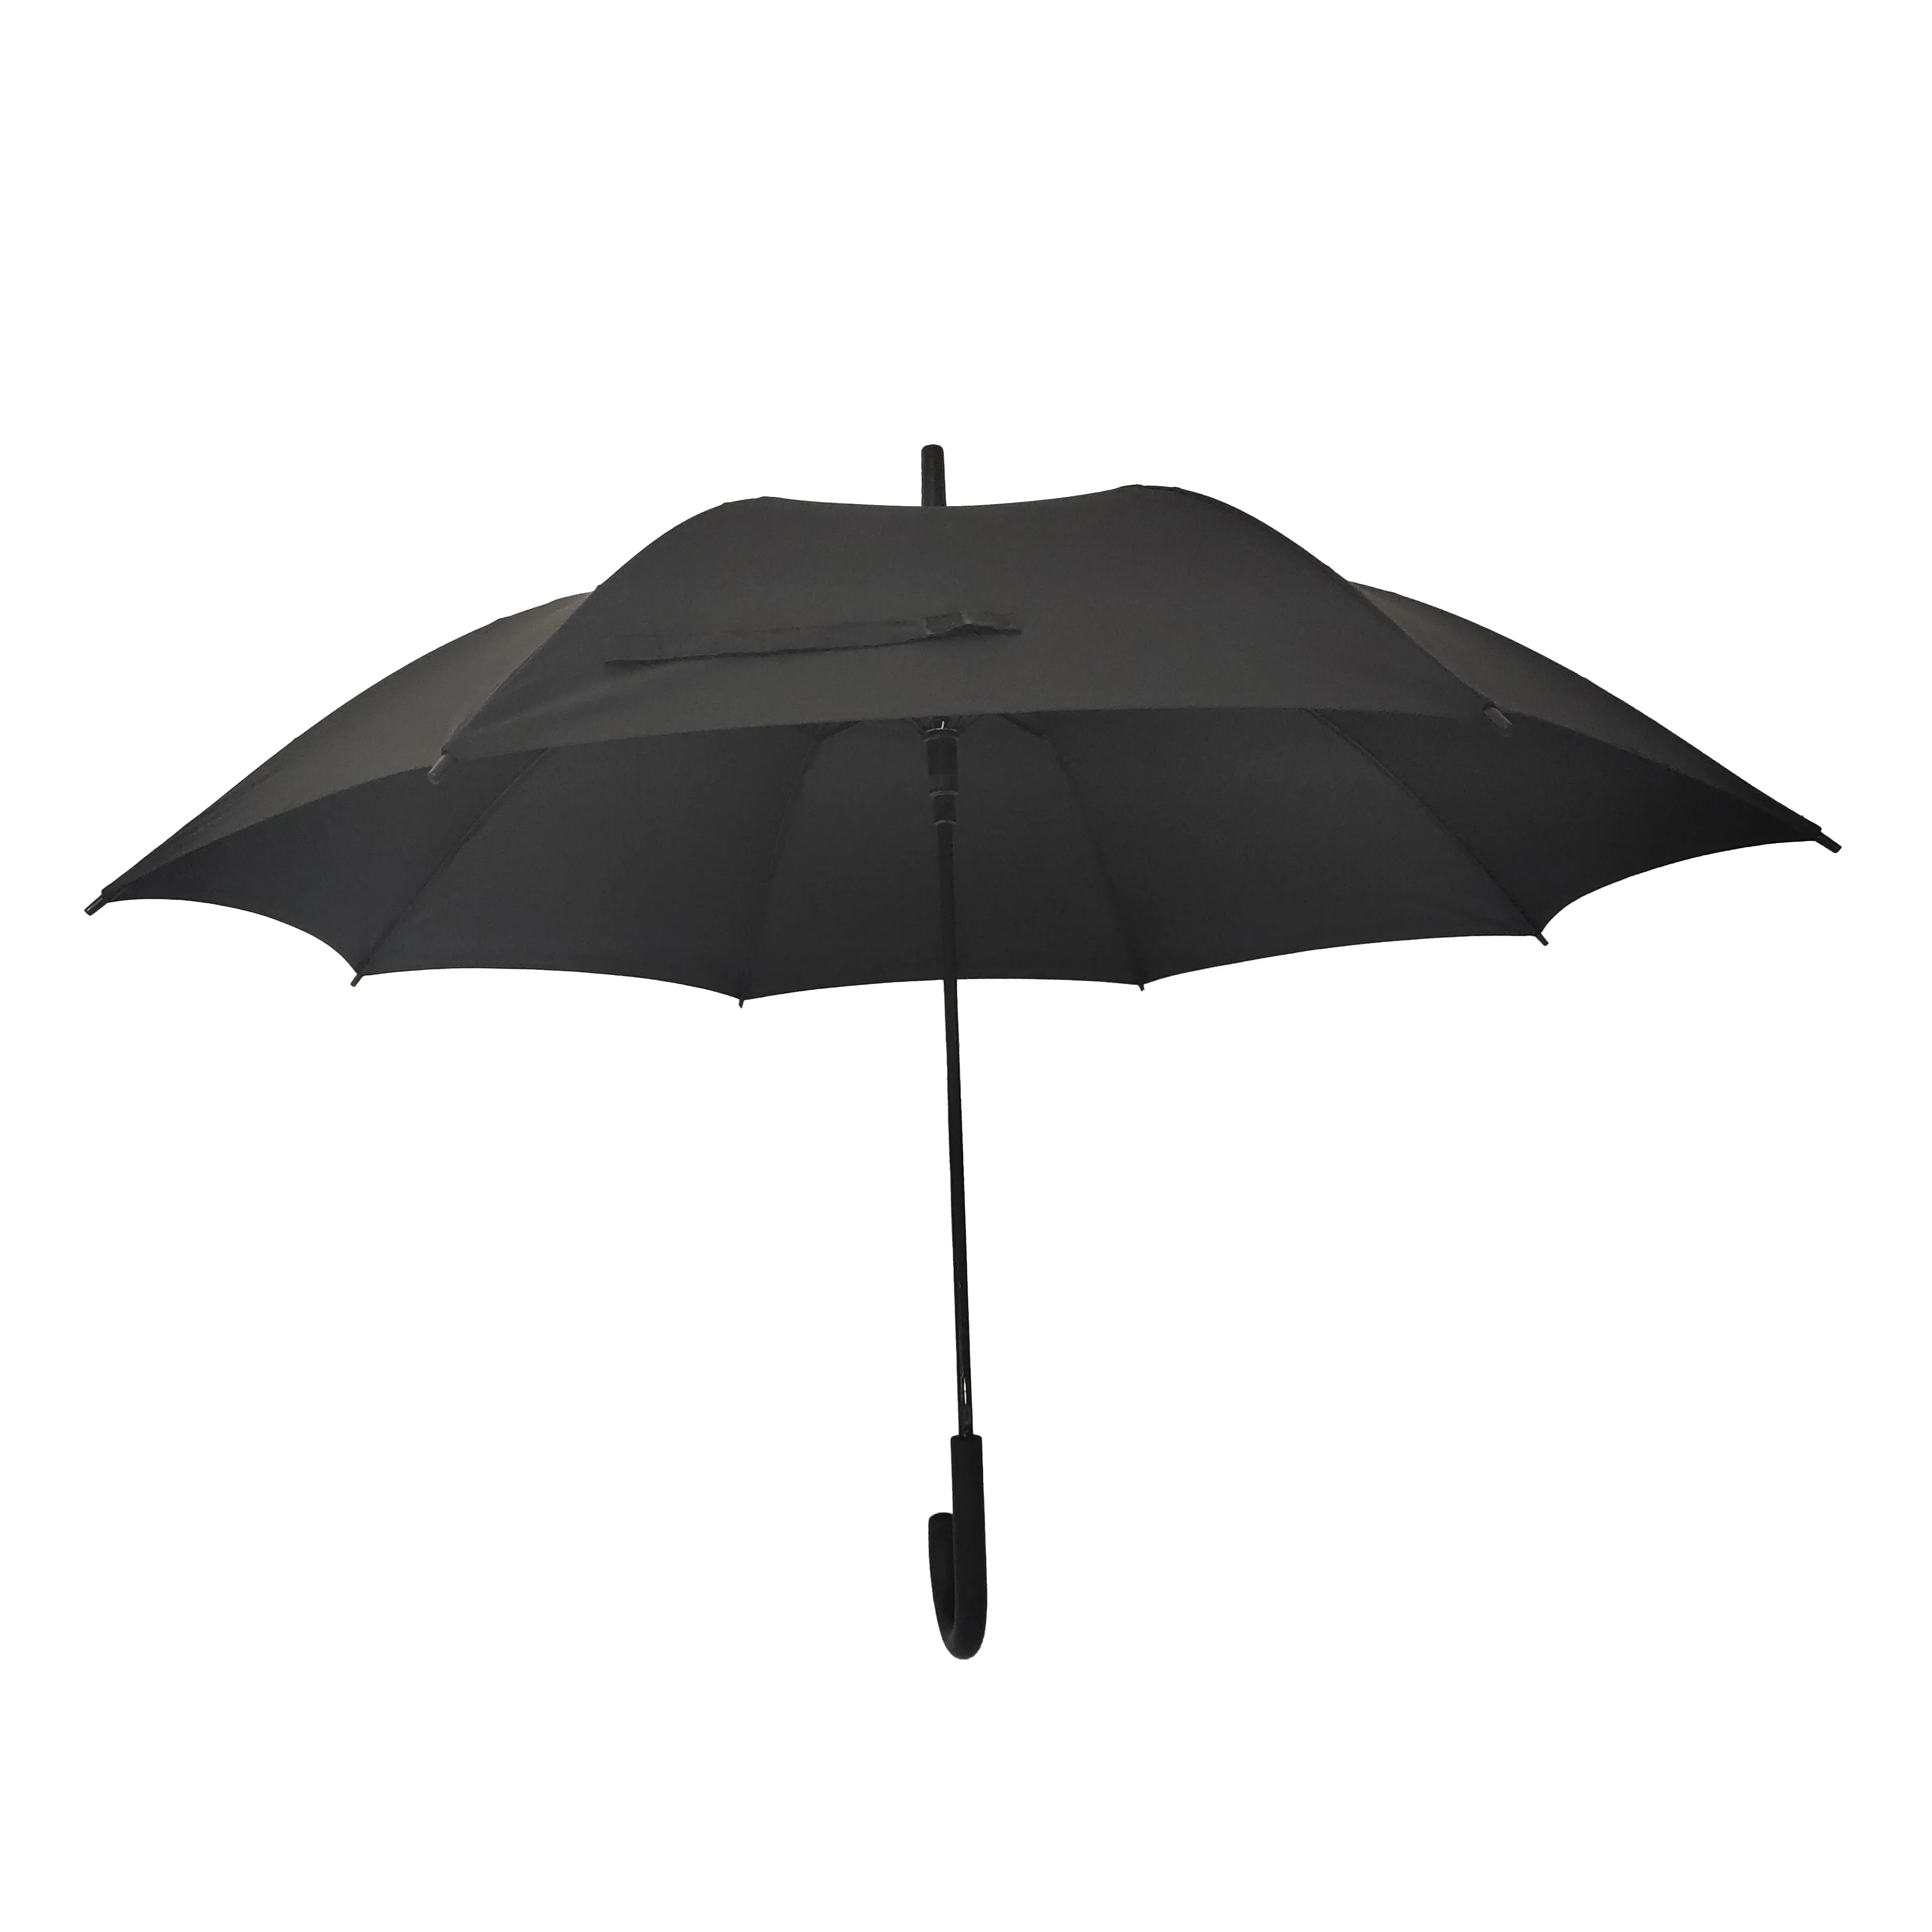 Hot selling umbrella_online 23 Inch Cheap Straight ambrellas Rainy Umbrala